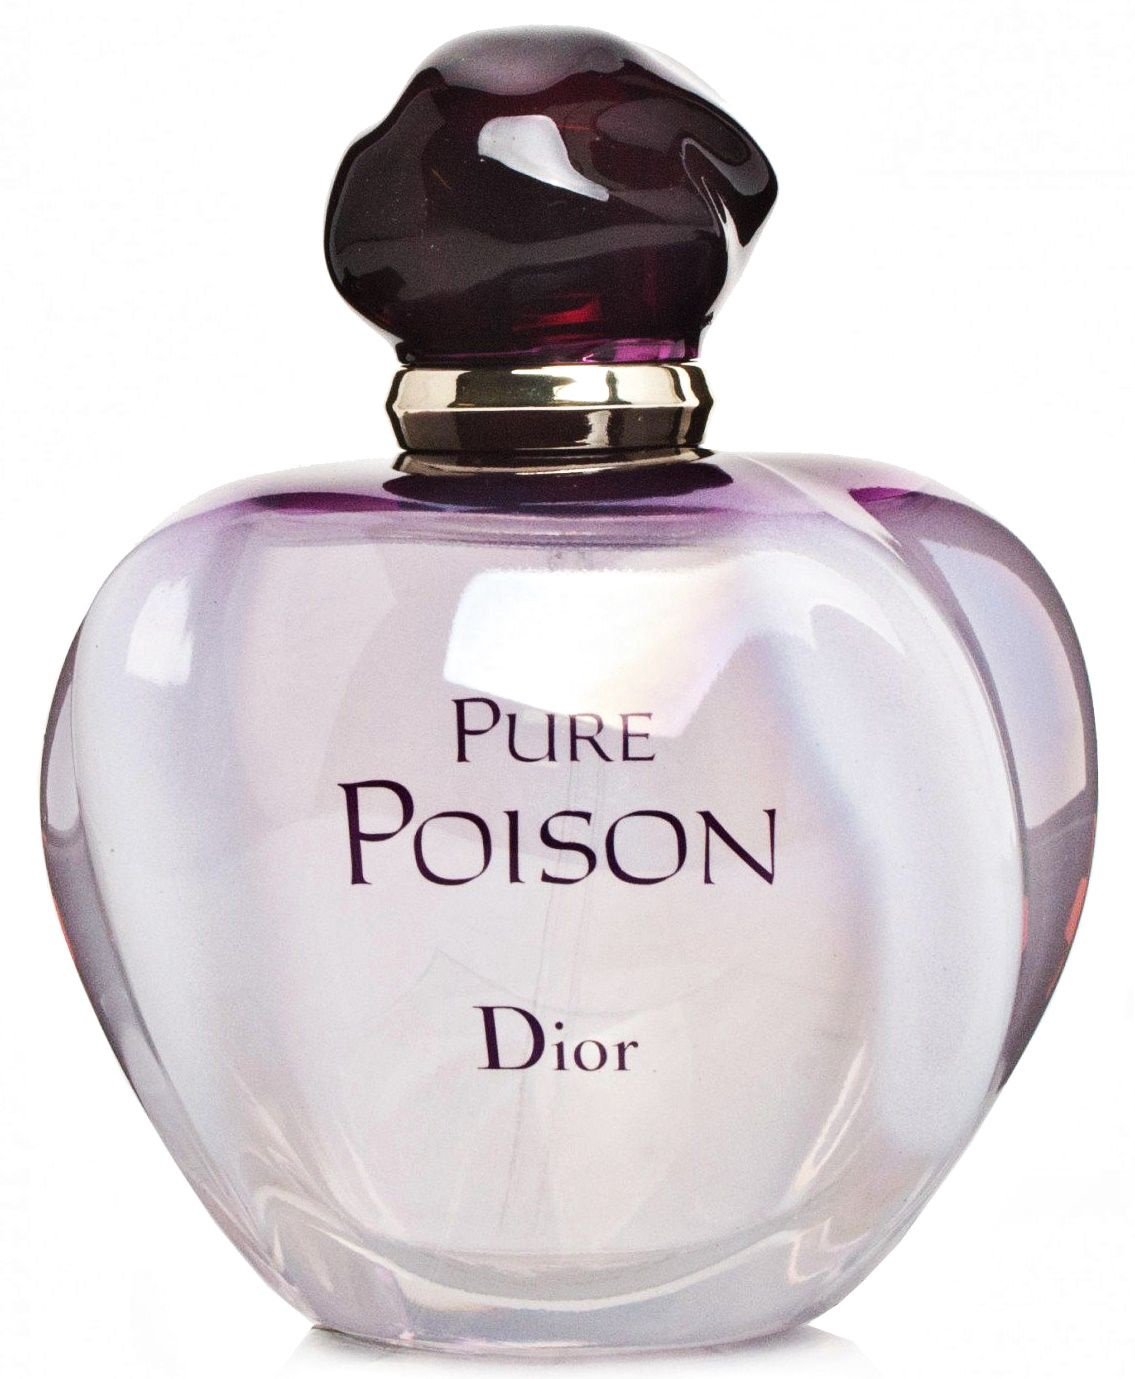 pure poison dior 50ml